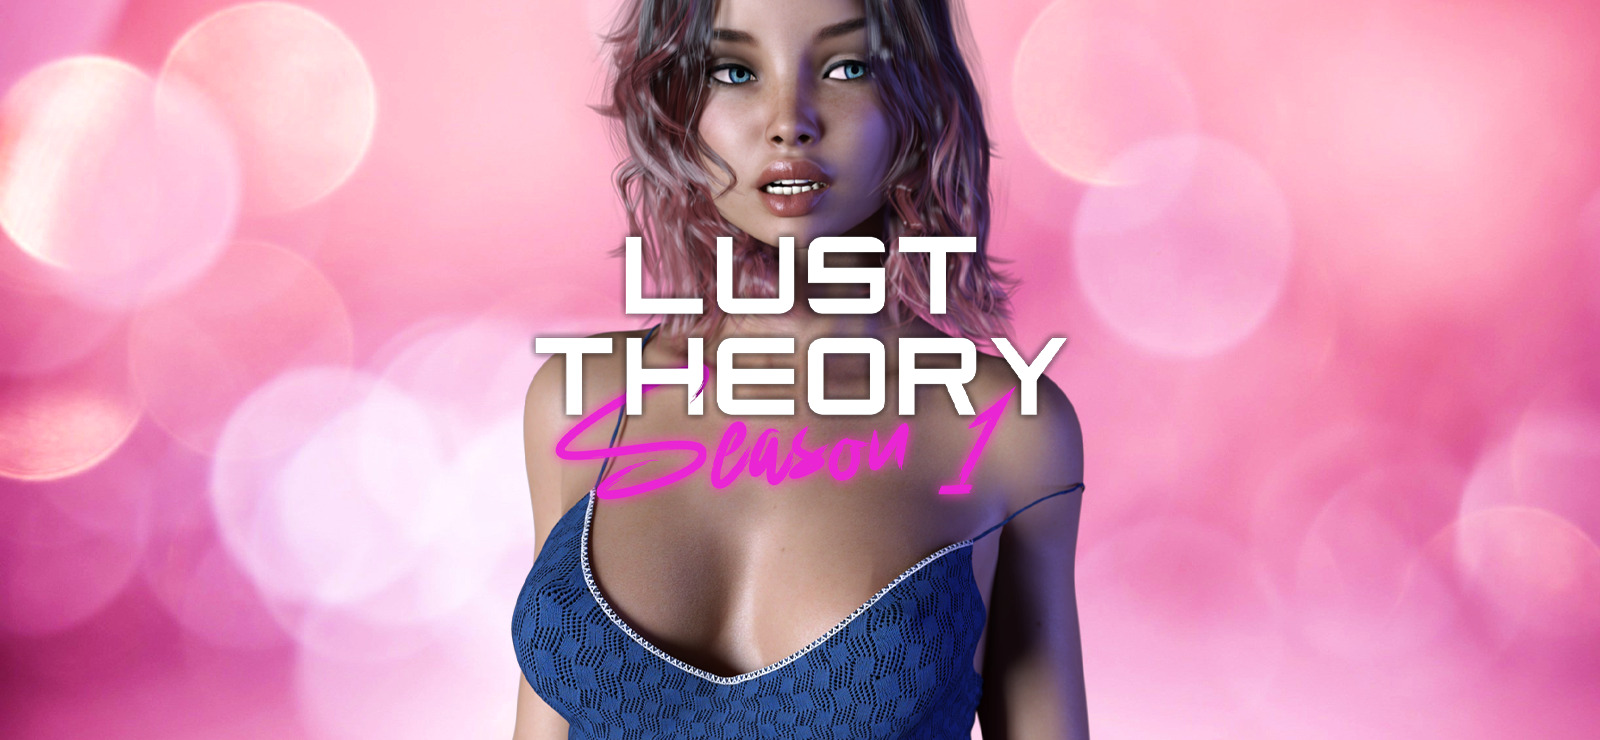 Lust theory apk